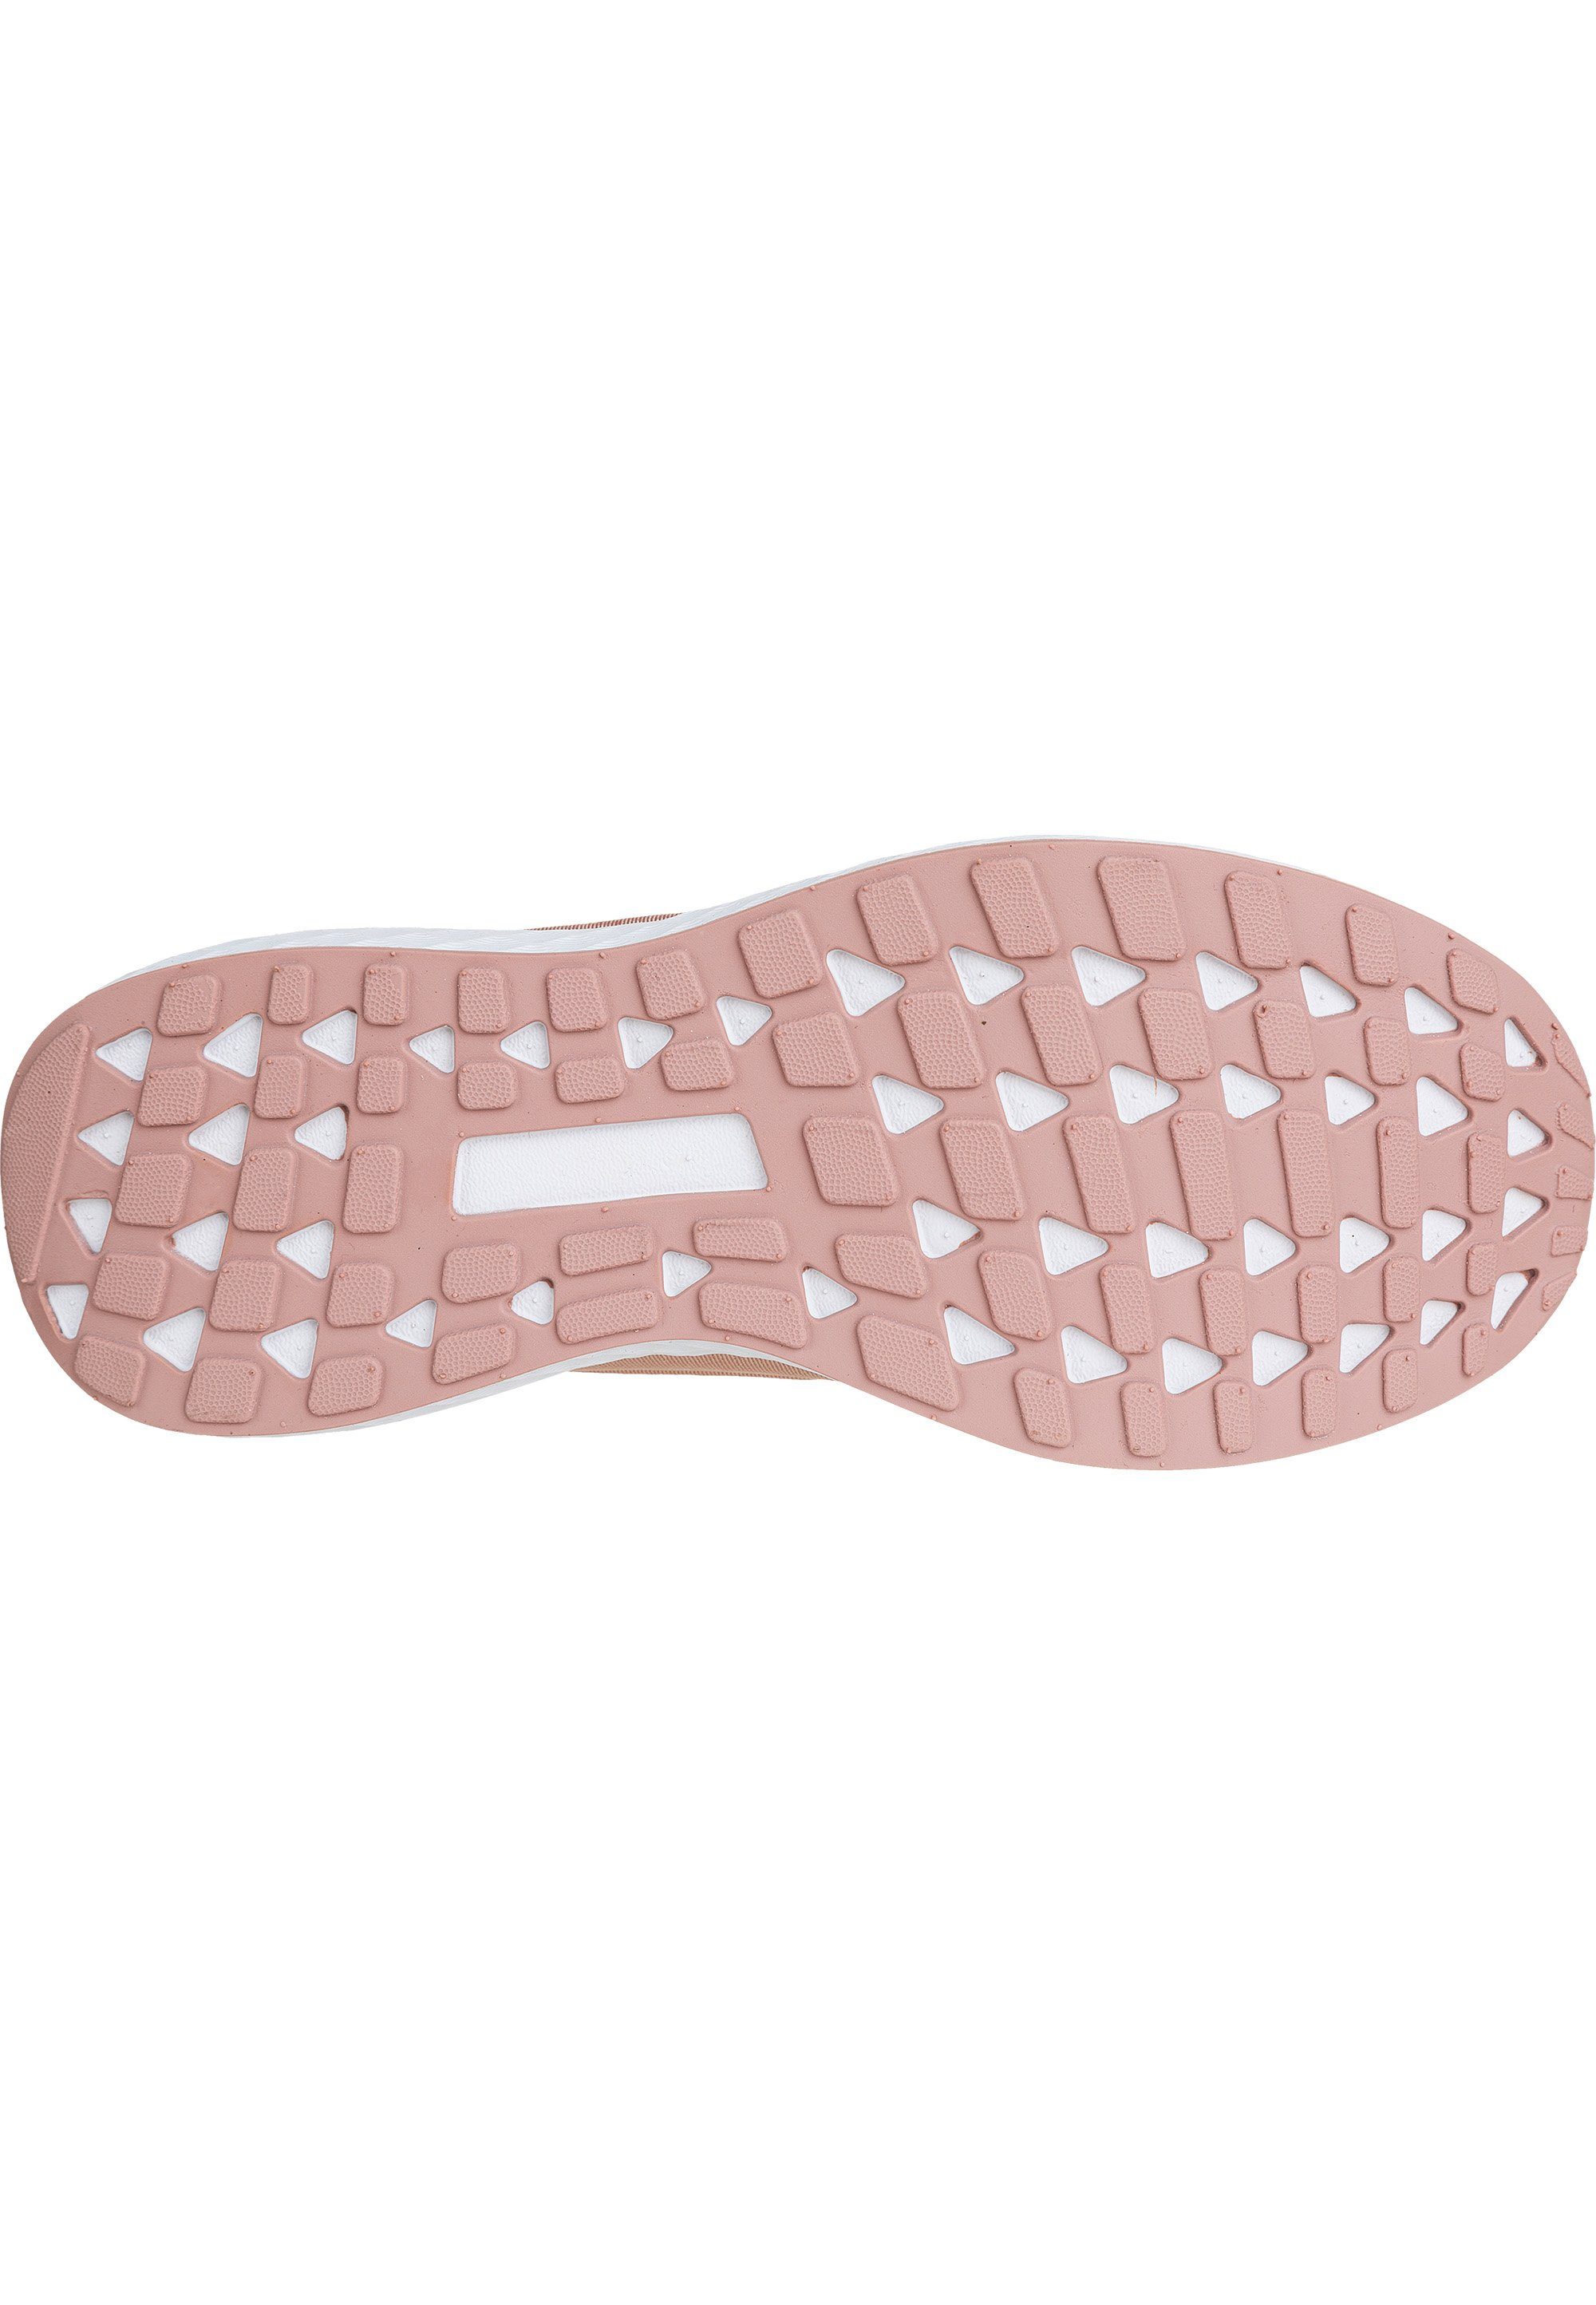 Vaserta ENDURANCE im Sneaker rosa-grau sportlichen Look